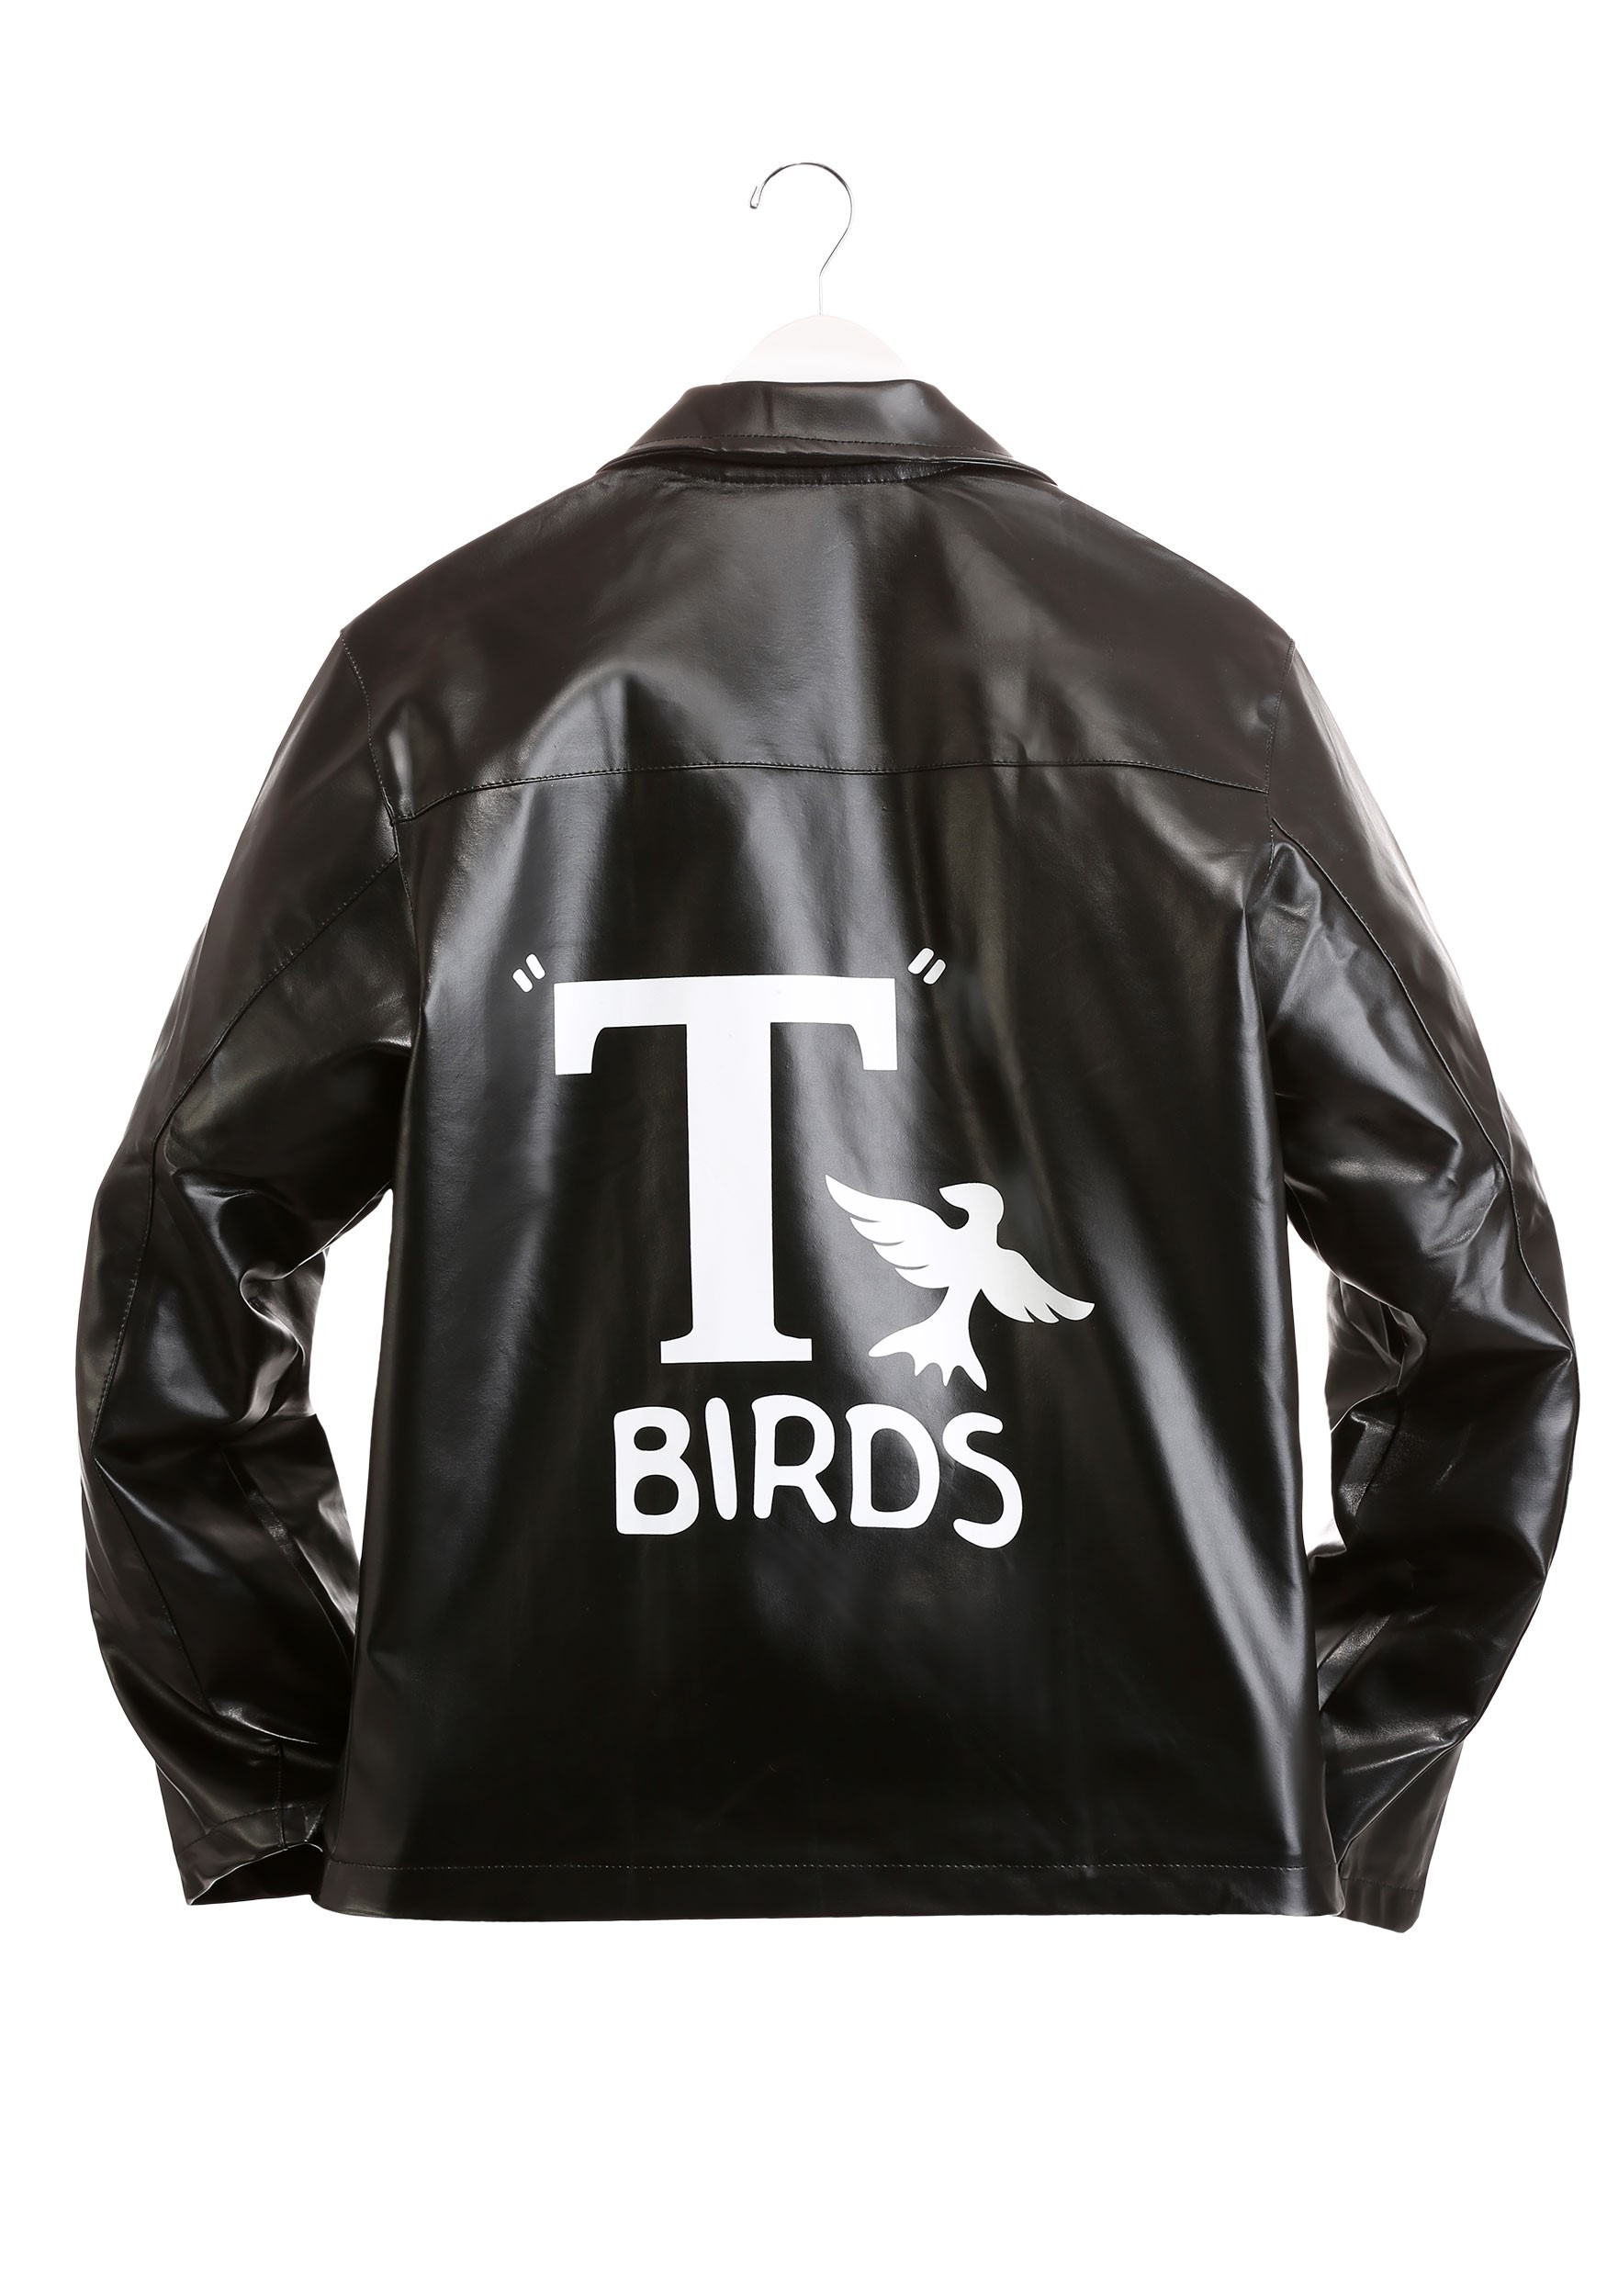 Chicos T-Bird Jacket Grasa Disfraz De Halloween